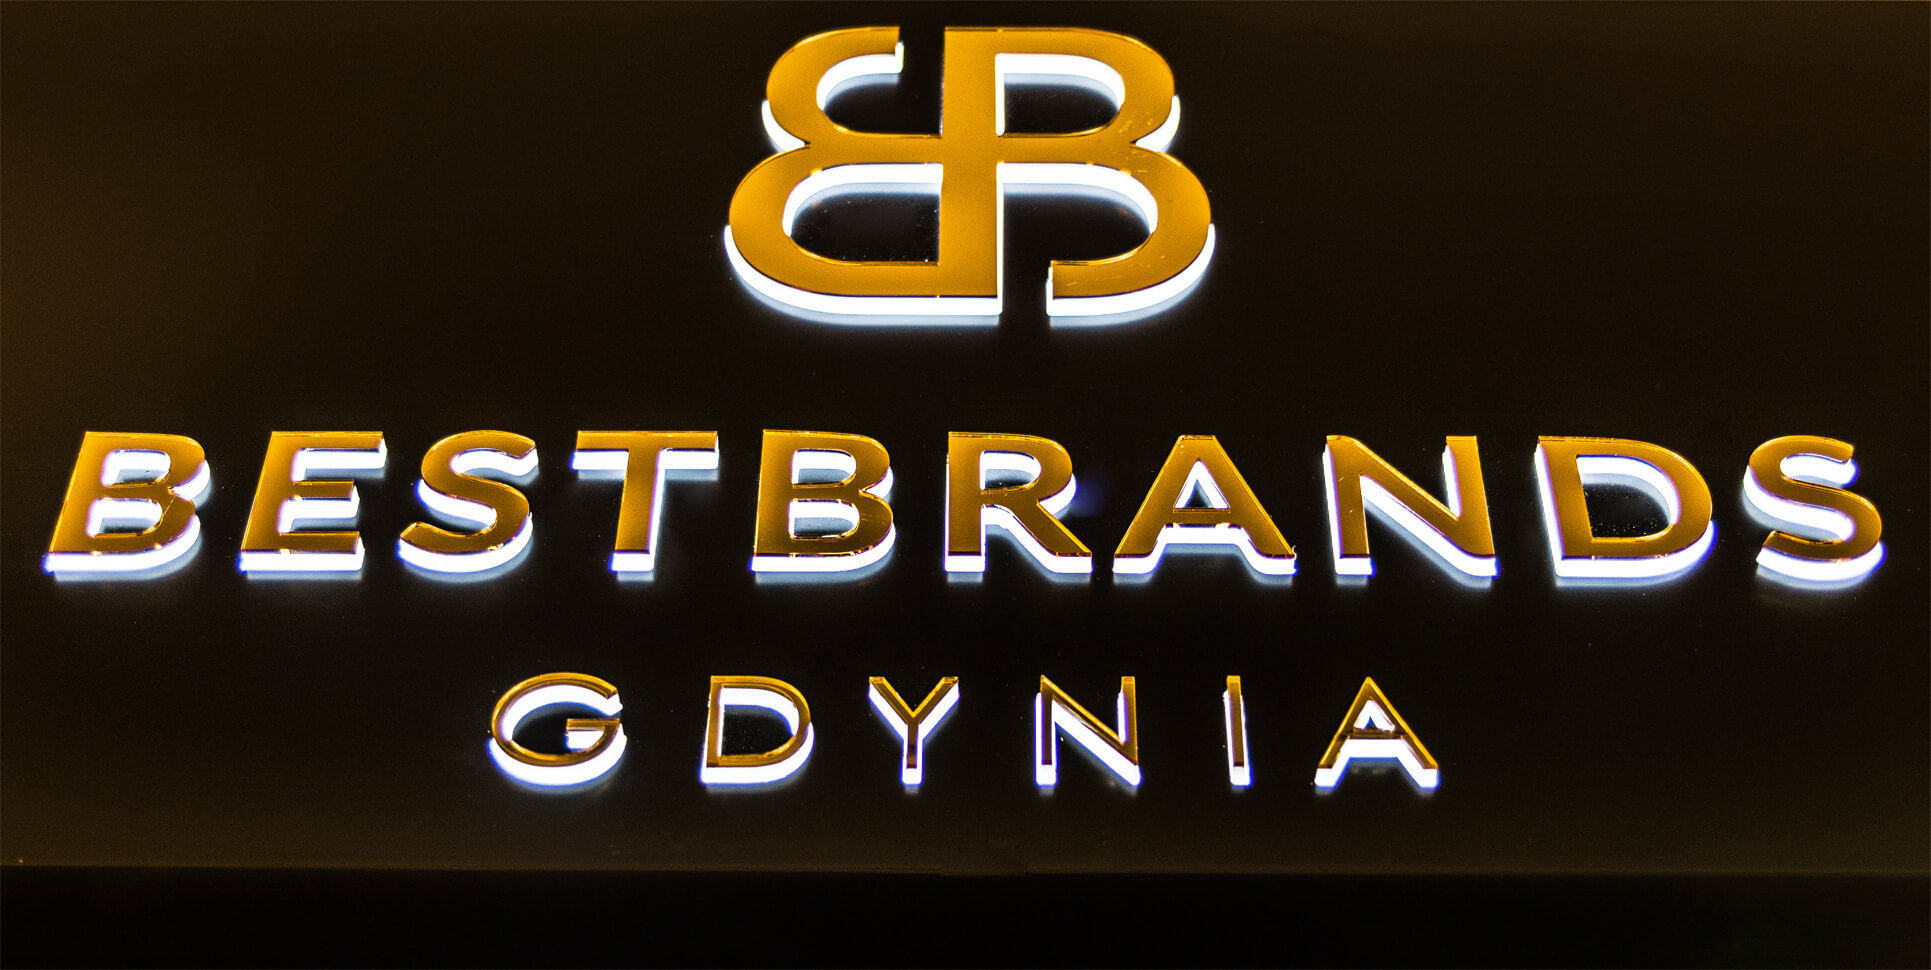 Bestbrands Gdynia - Bestbrands Gdynia - leuchtende Werbekassette über dem Eingang